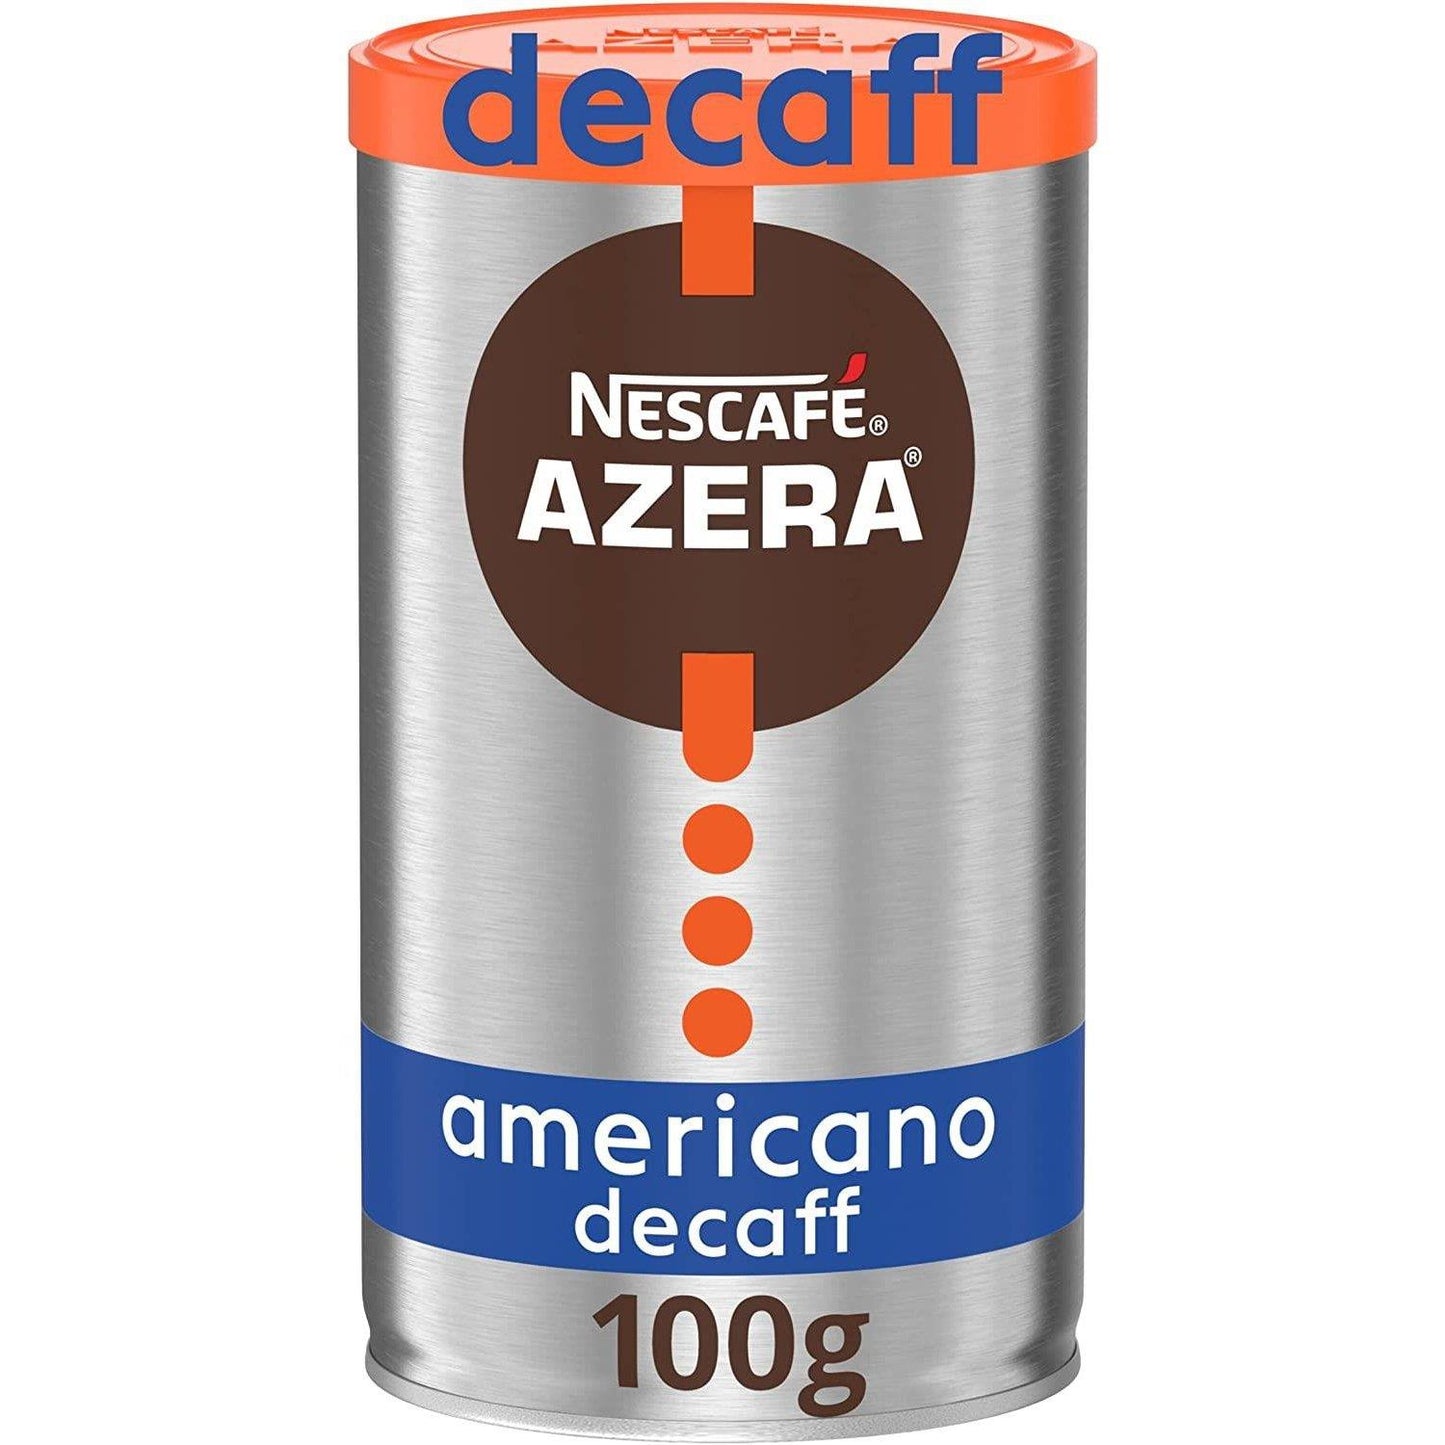 Nescafe Azera Decaf Americano Drum 100g